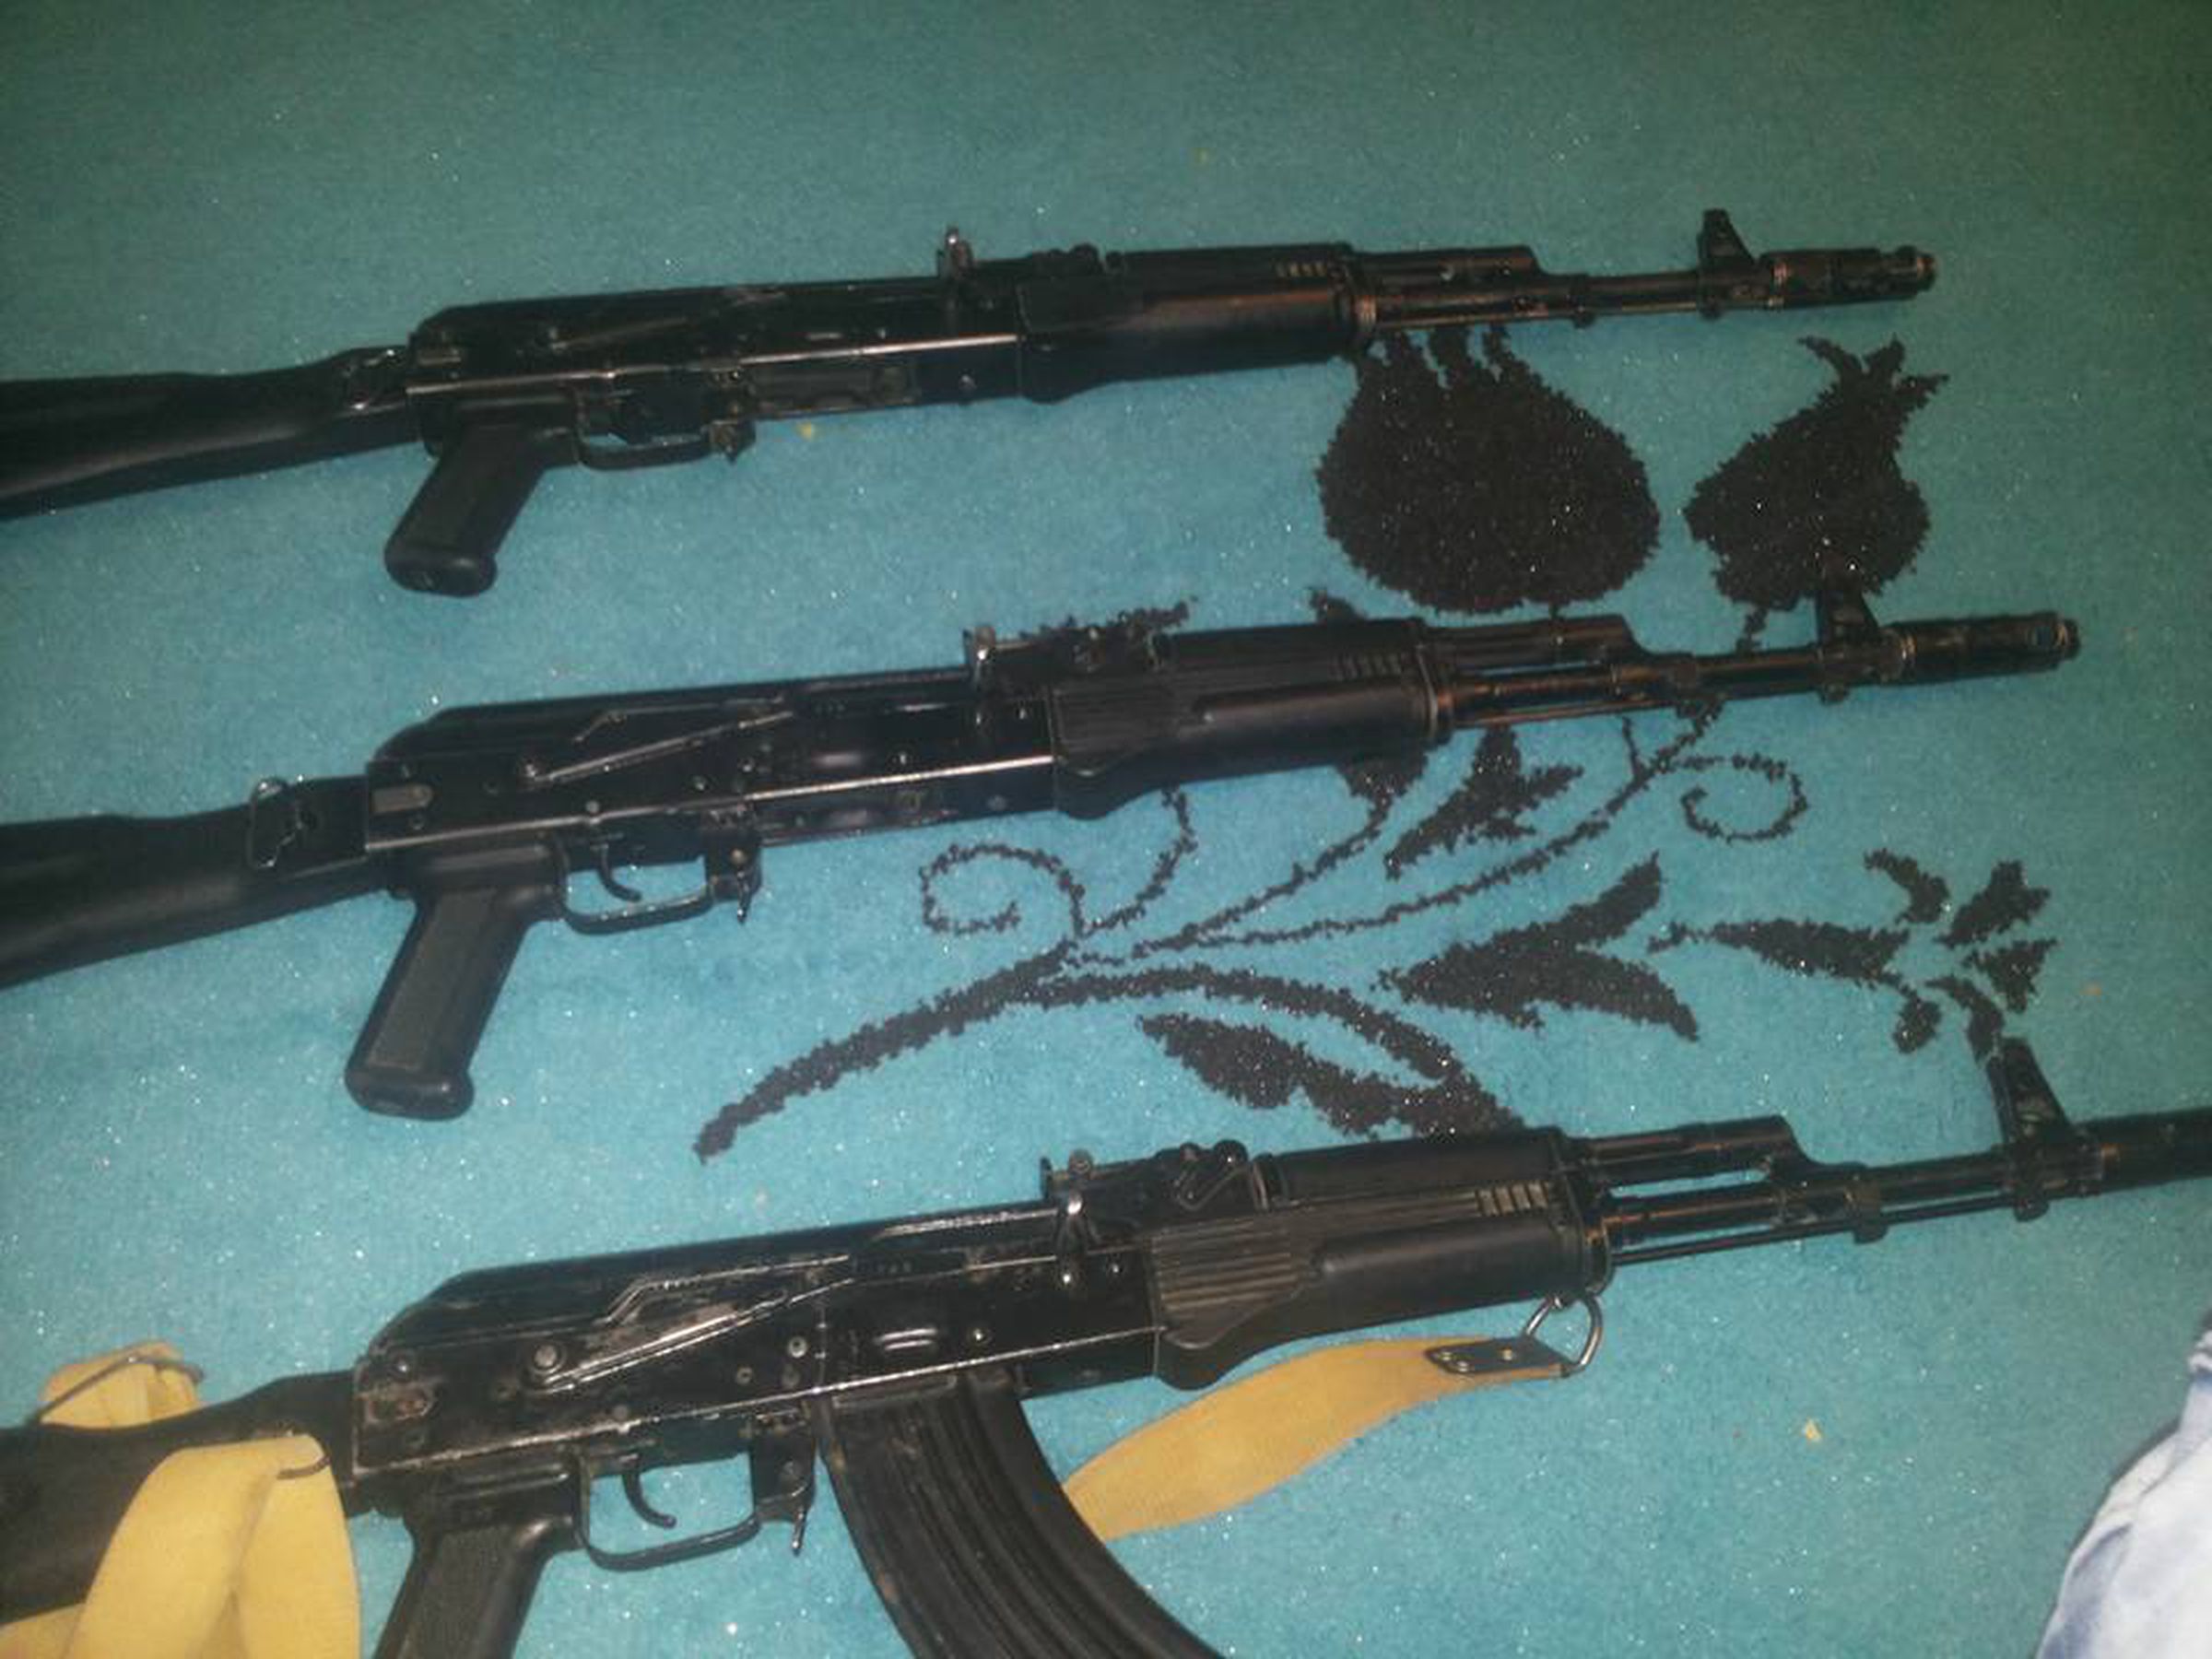 Example weapons sold via social media in Libya